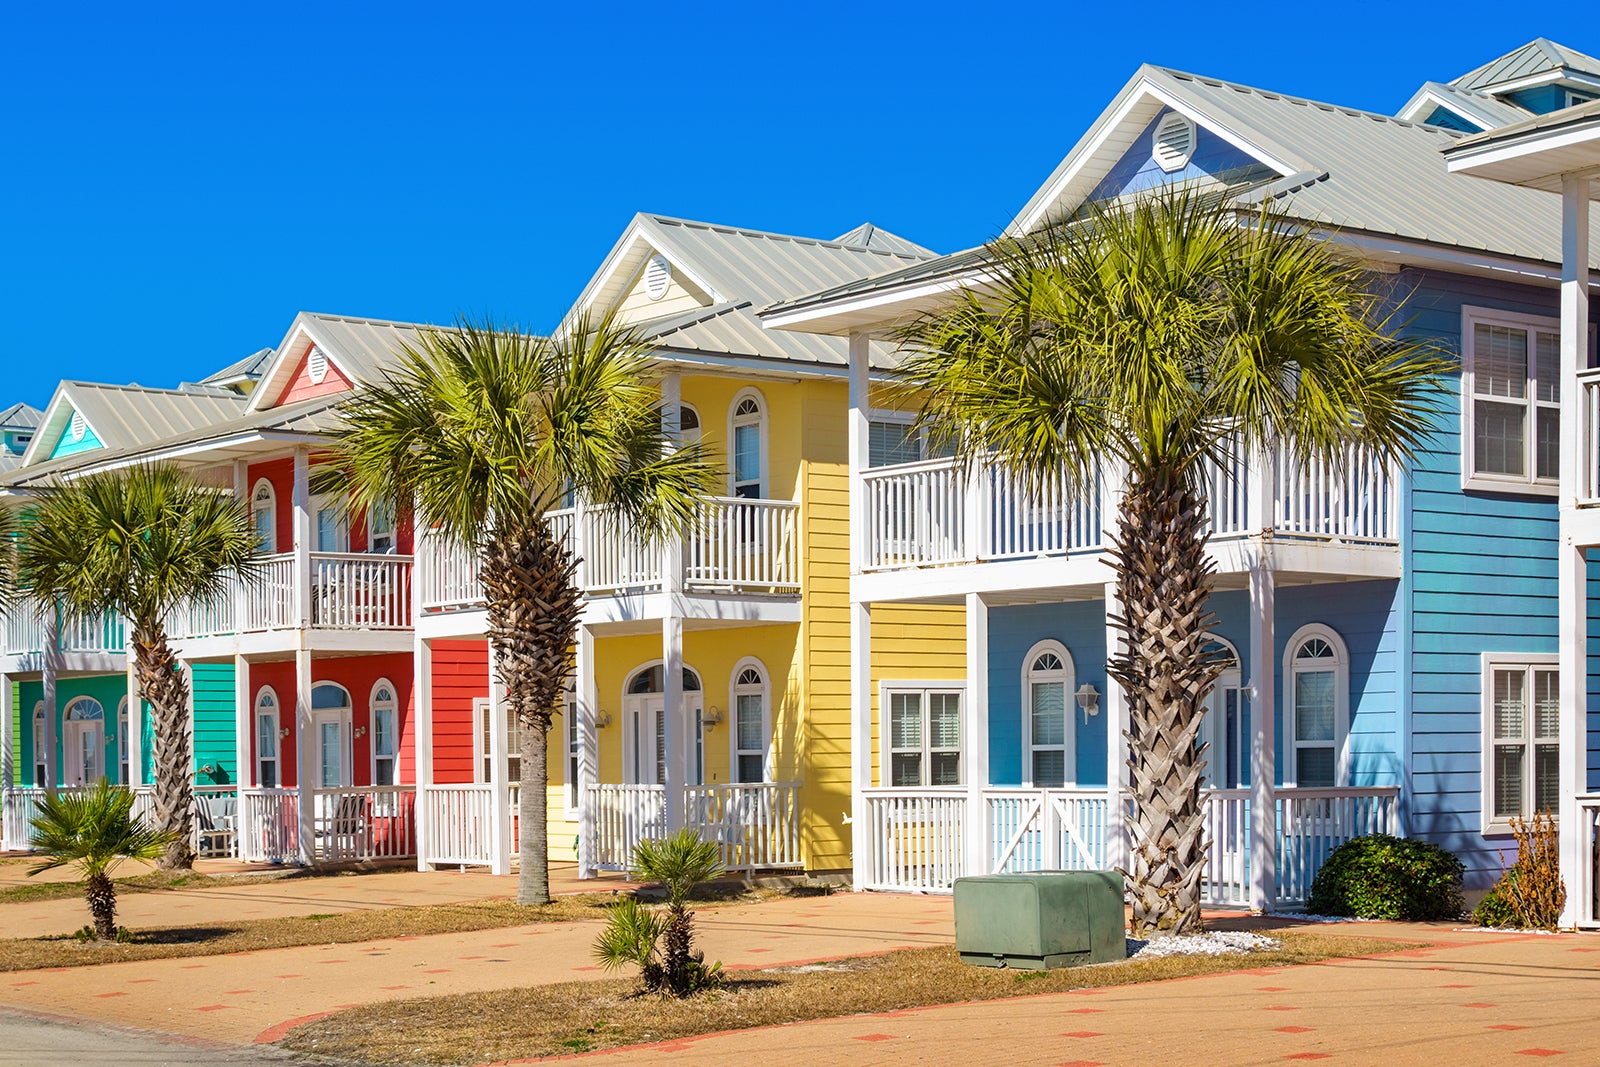 Colorful Houses in Panama City Beach Florida USA